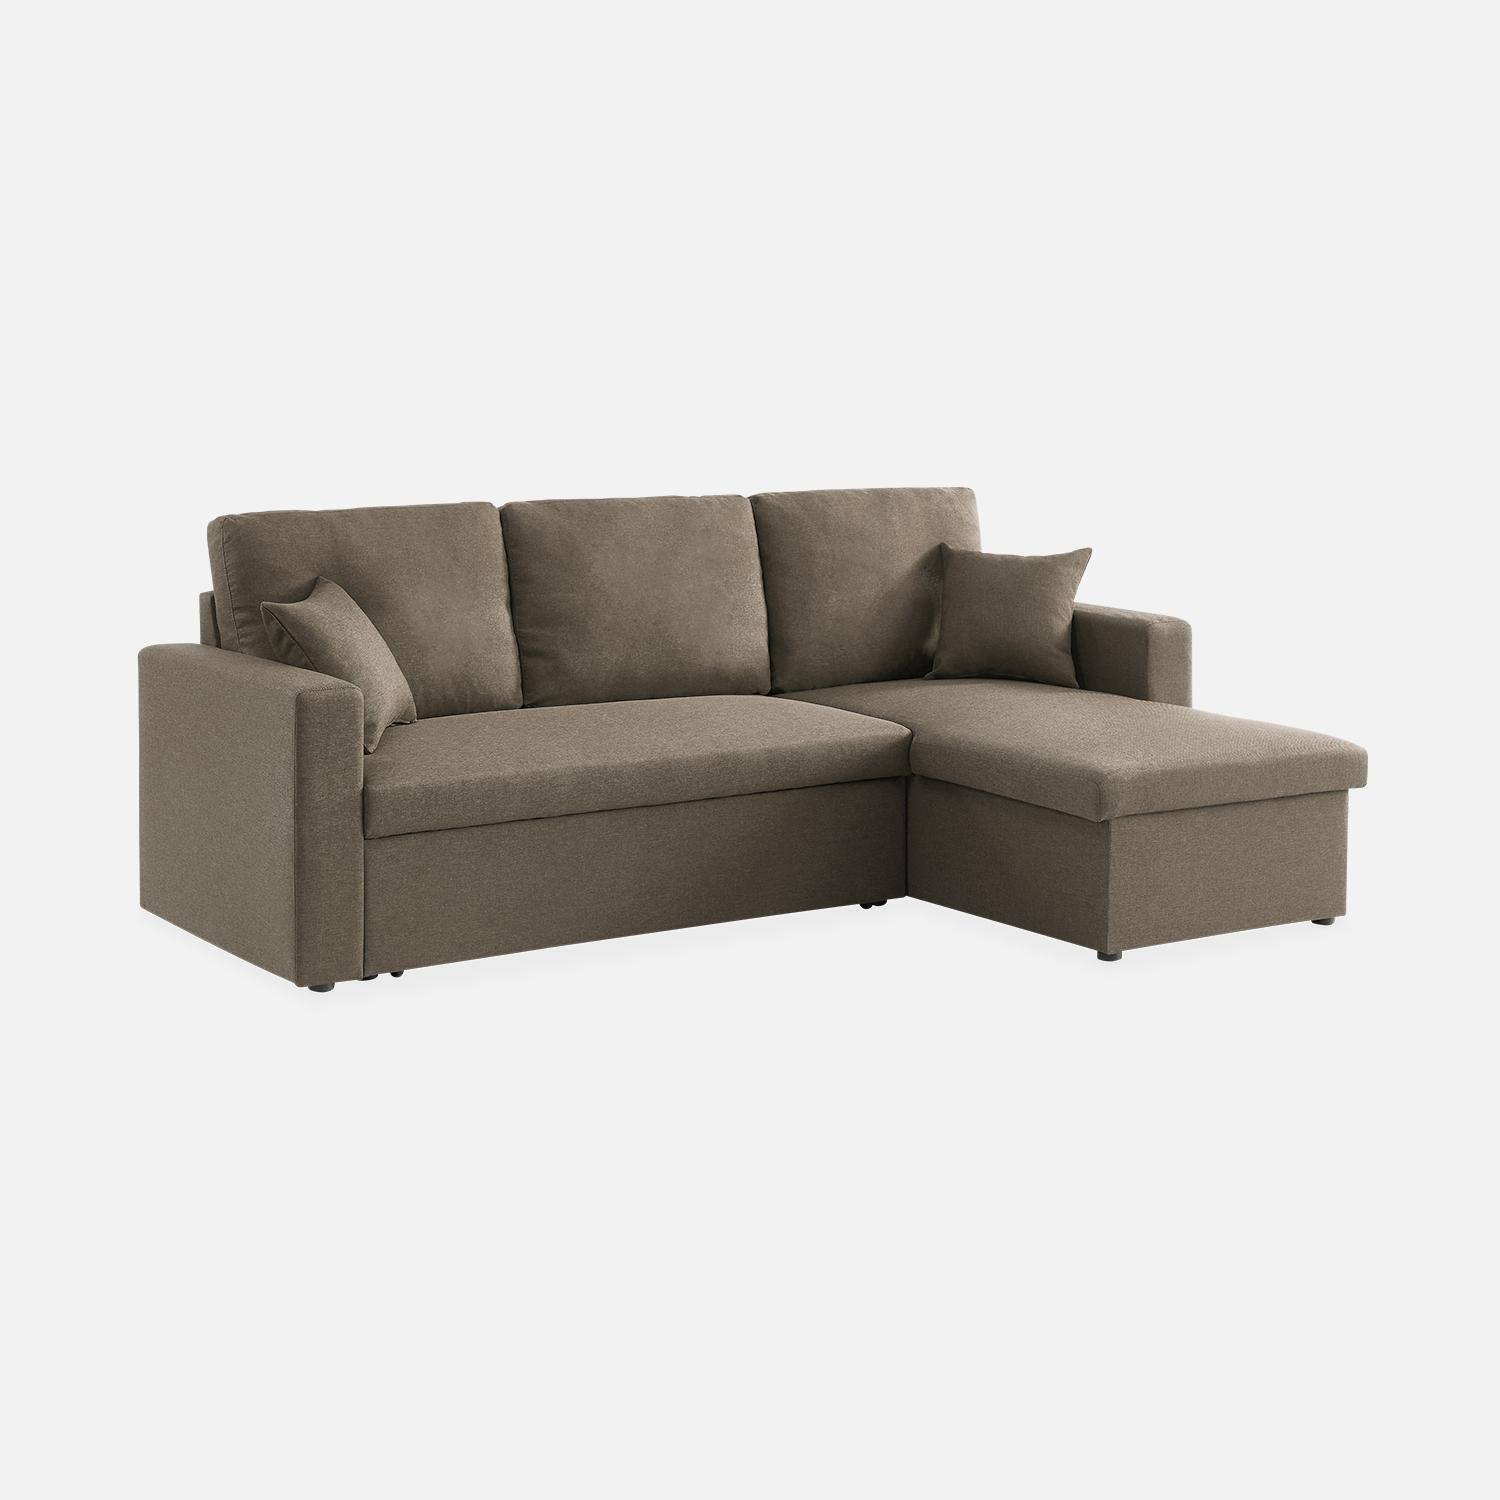 3-seater reversible brown corner sofa bed with storage box, brown, L219xD81xH68cm, IDA Photo5